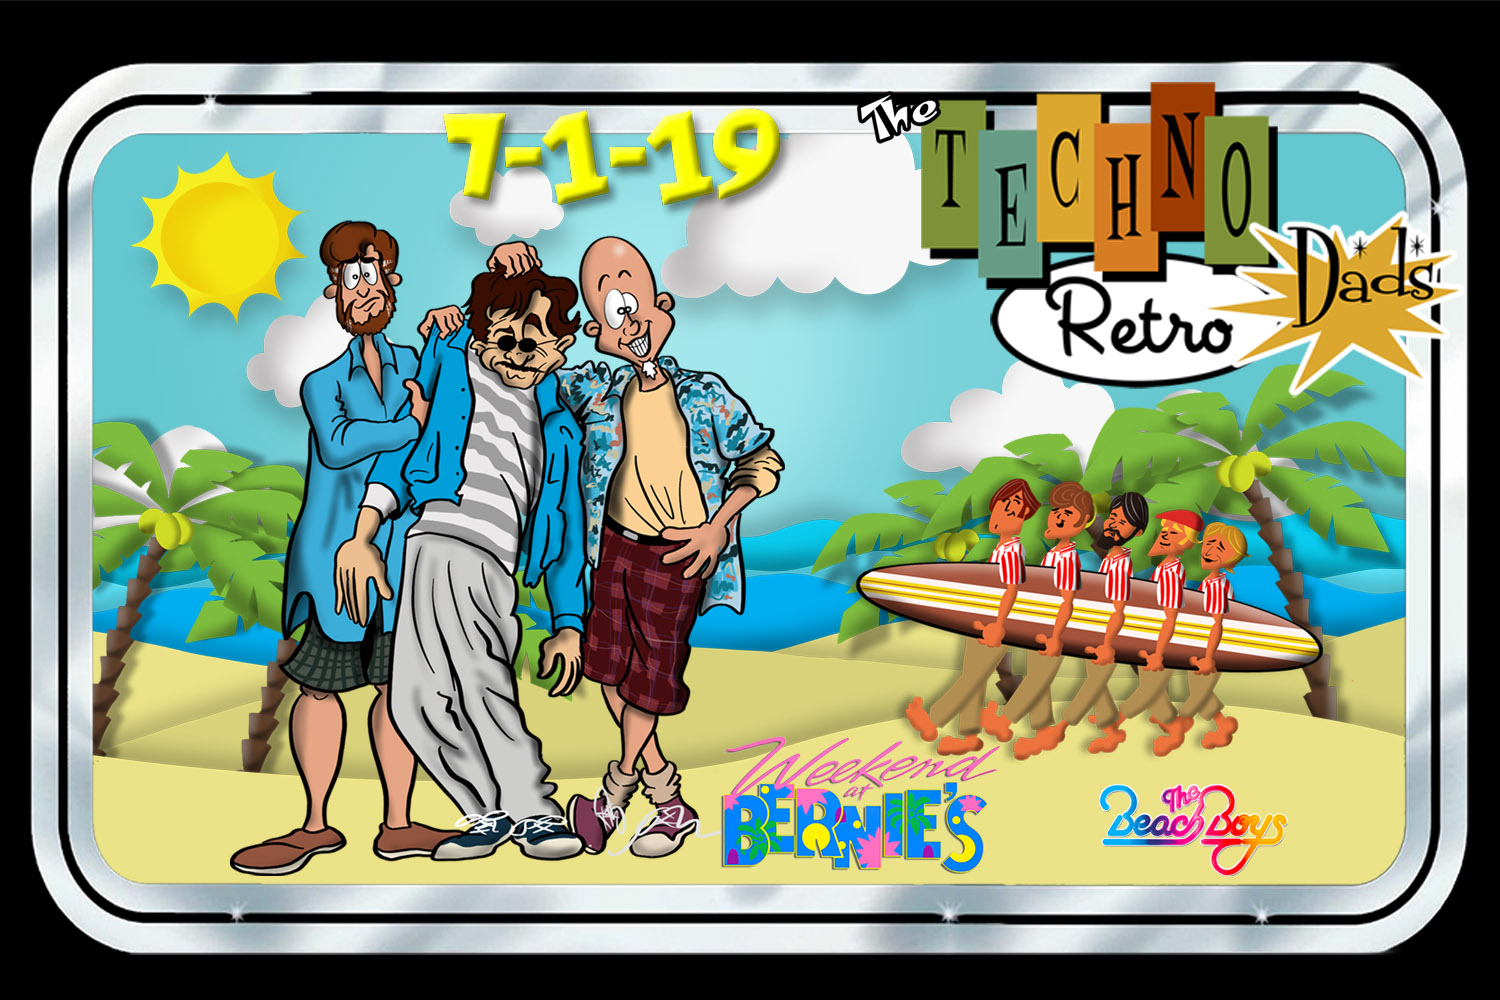 The Beach Boys meet Bernie